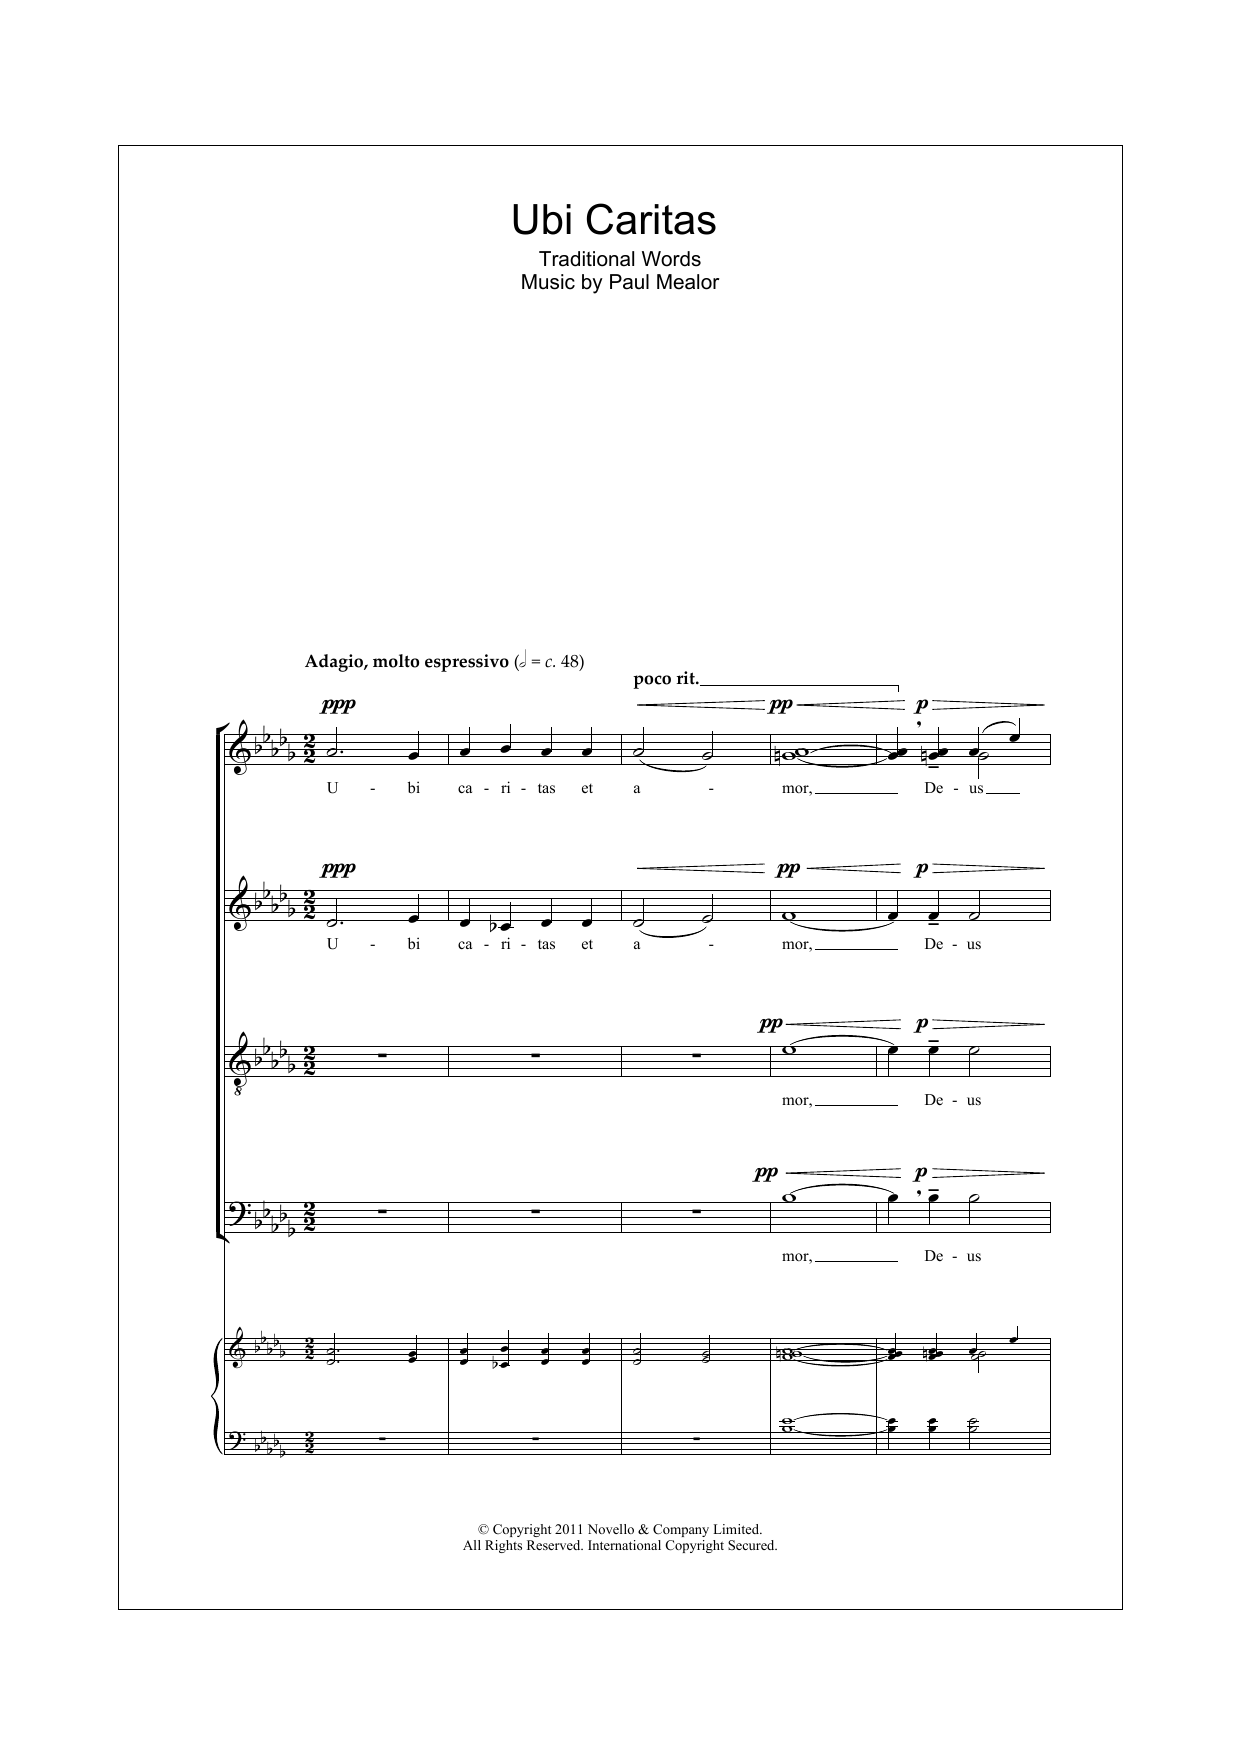 Paul Mealor Ubi Caritas Sheet Music Notes & Chords for SATB Choir - Download or Print PDF